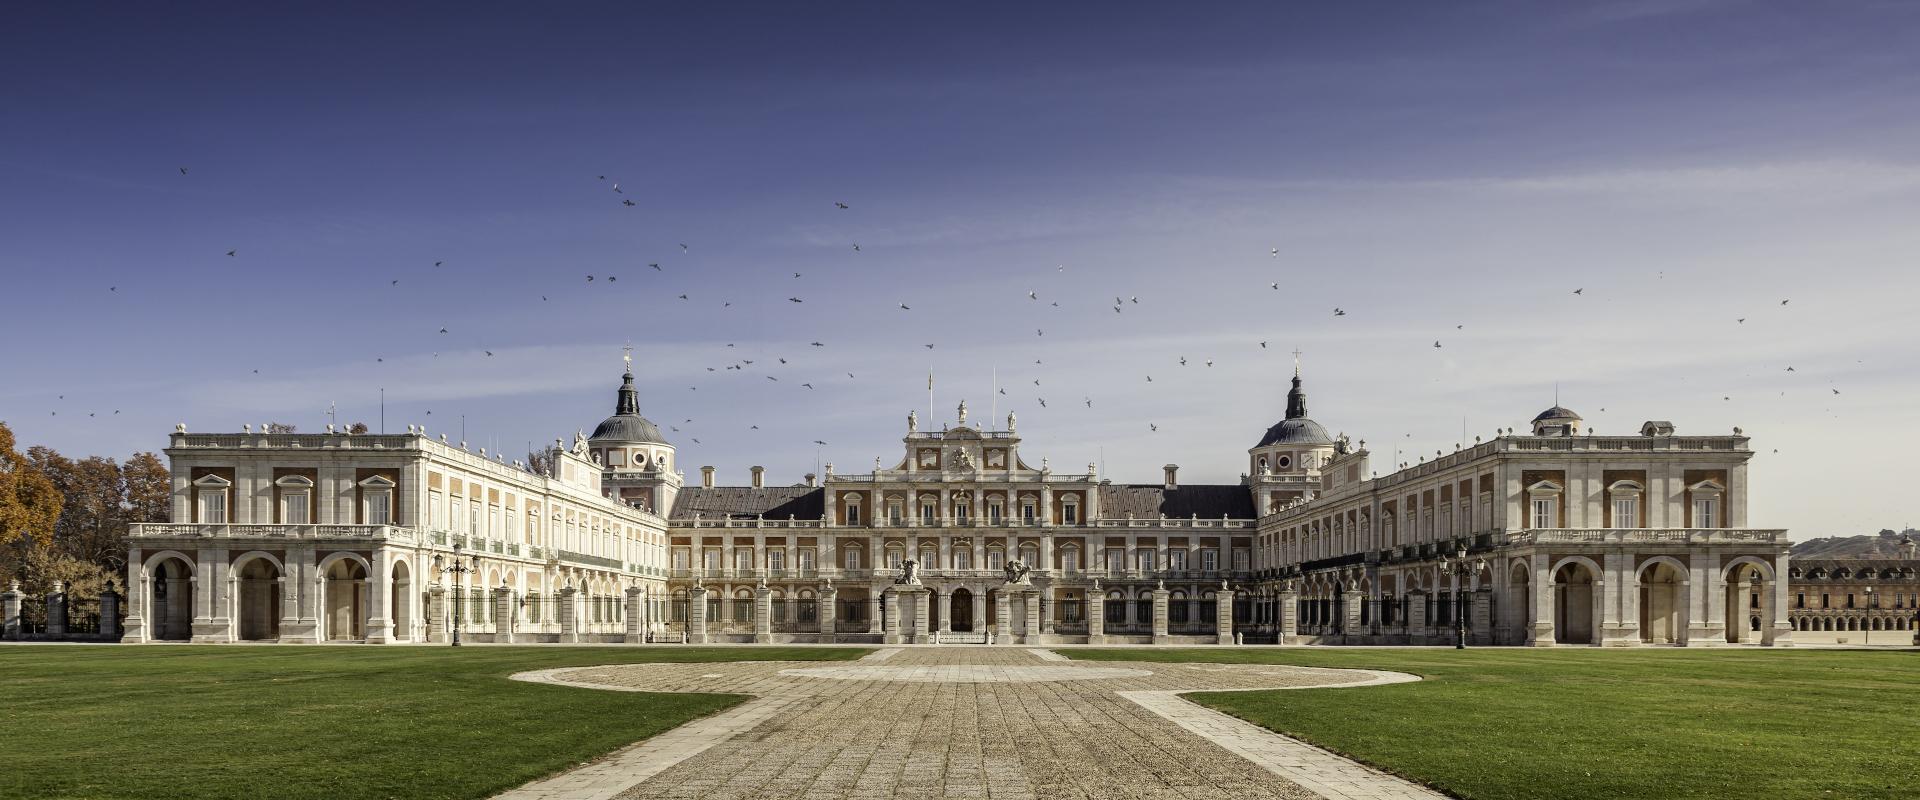 Palacio Real de Aranjuez | Patrimonio Nacional